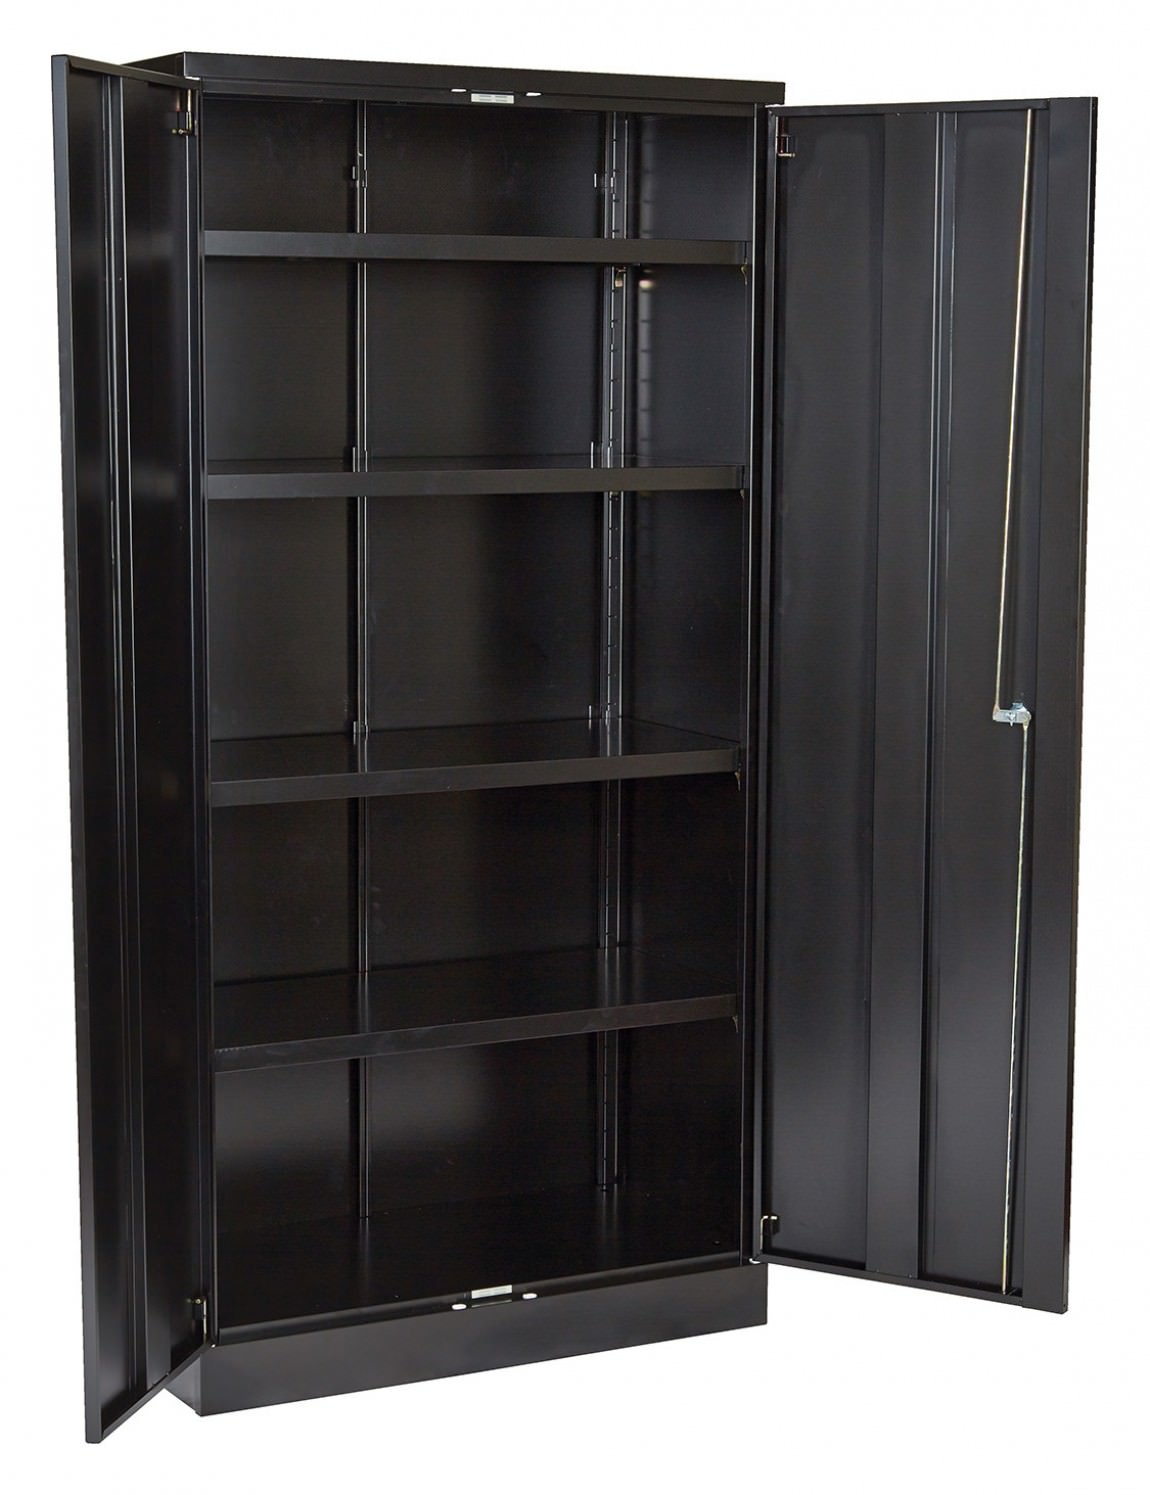 https://madisonliquidators.com/images/p/1150/24706-storage-cabinet-with-4-adjustable-shelves-4.jpg